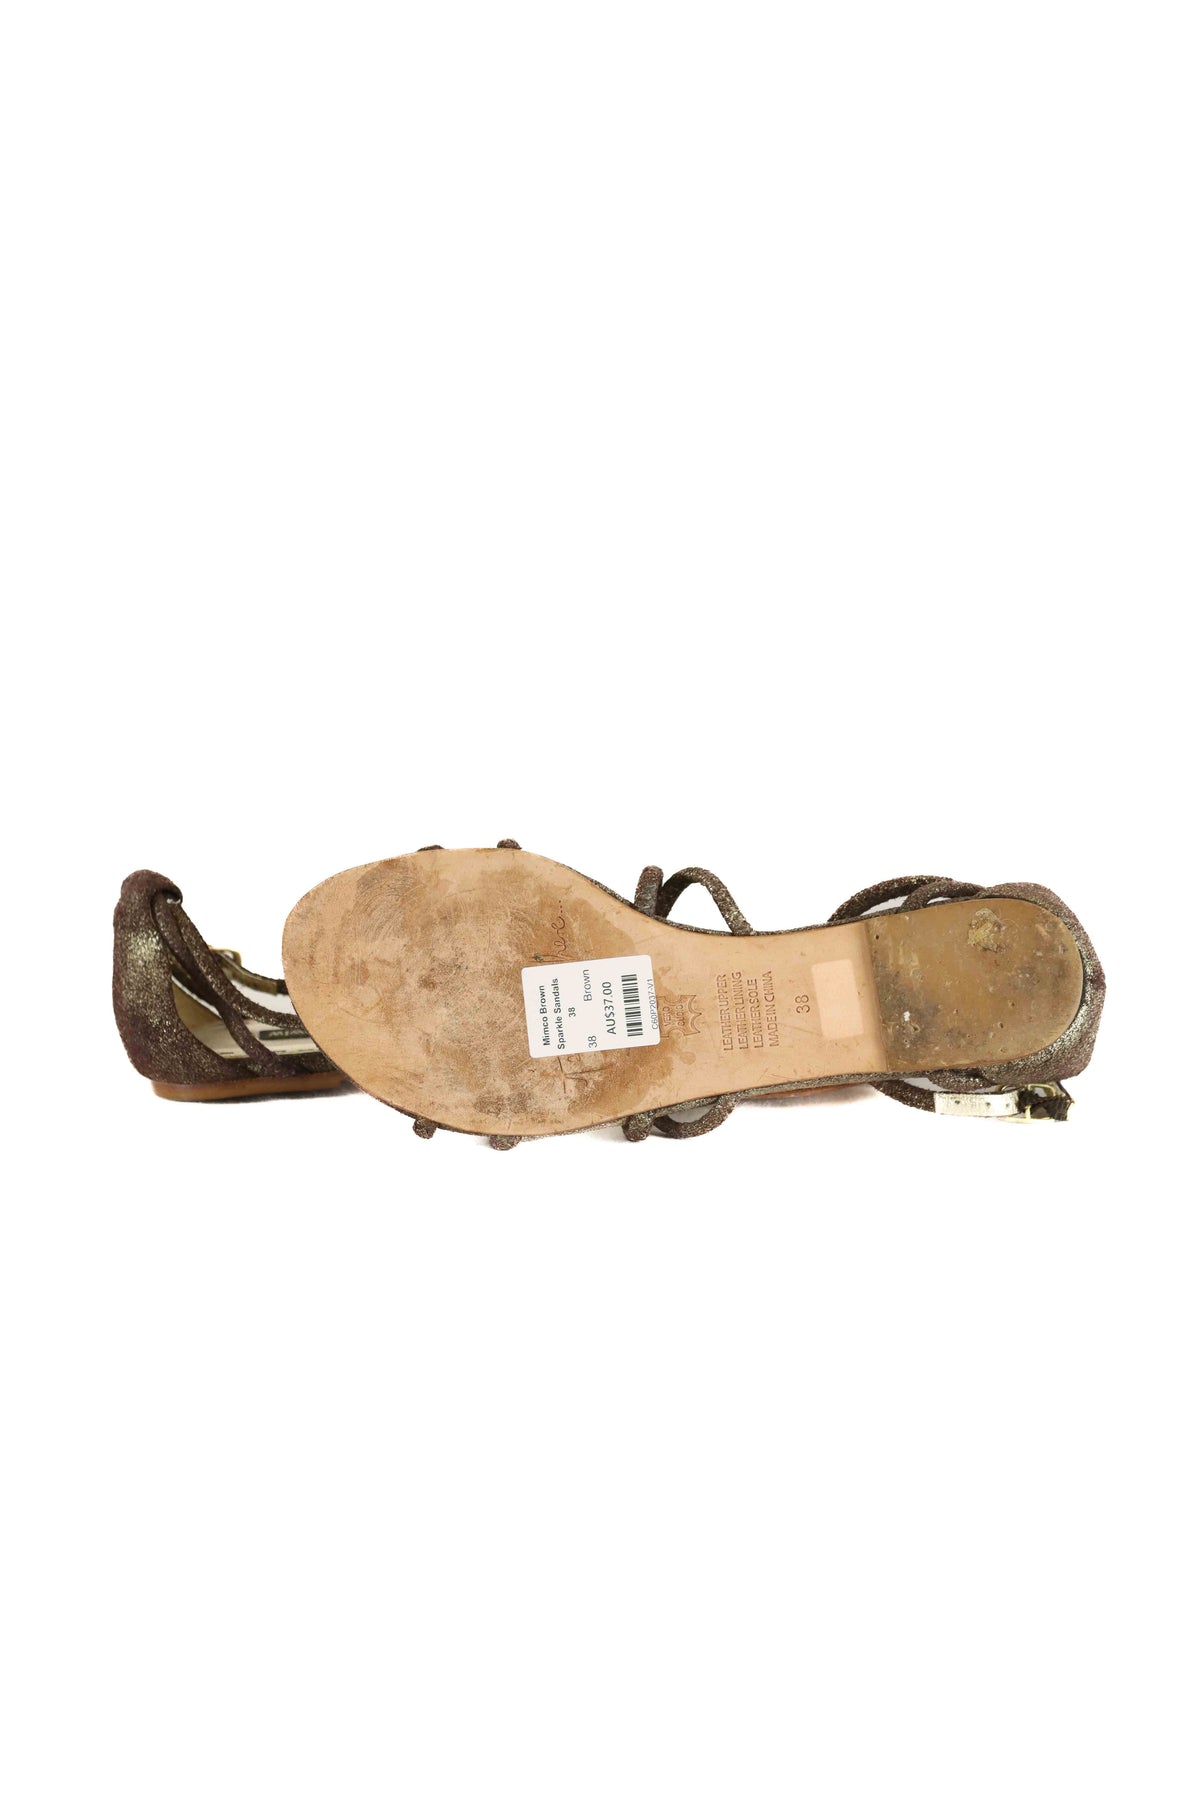 Mimco Brown Sparkle Sandals 38